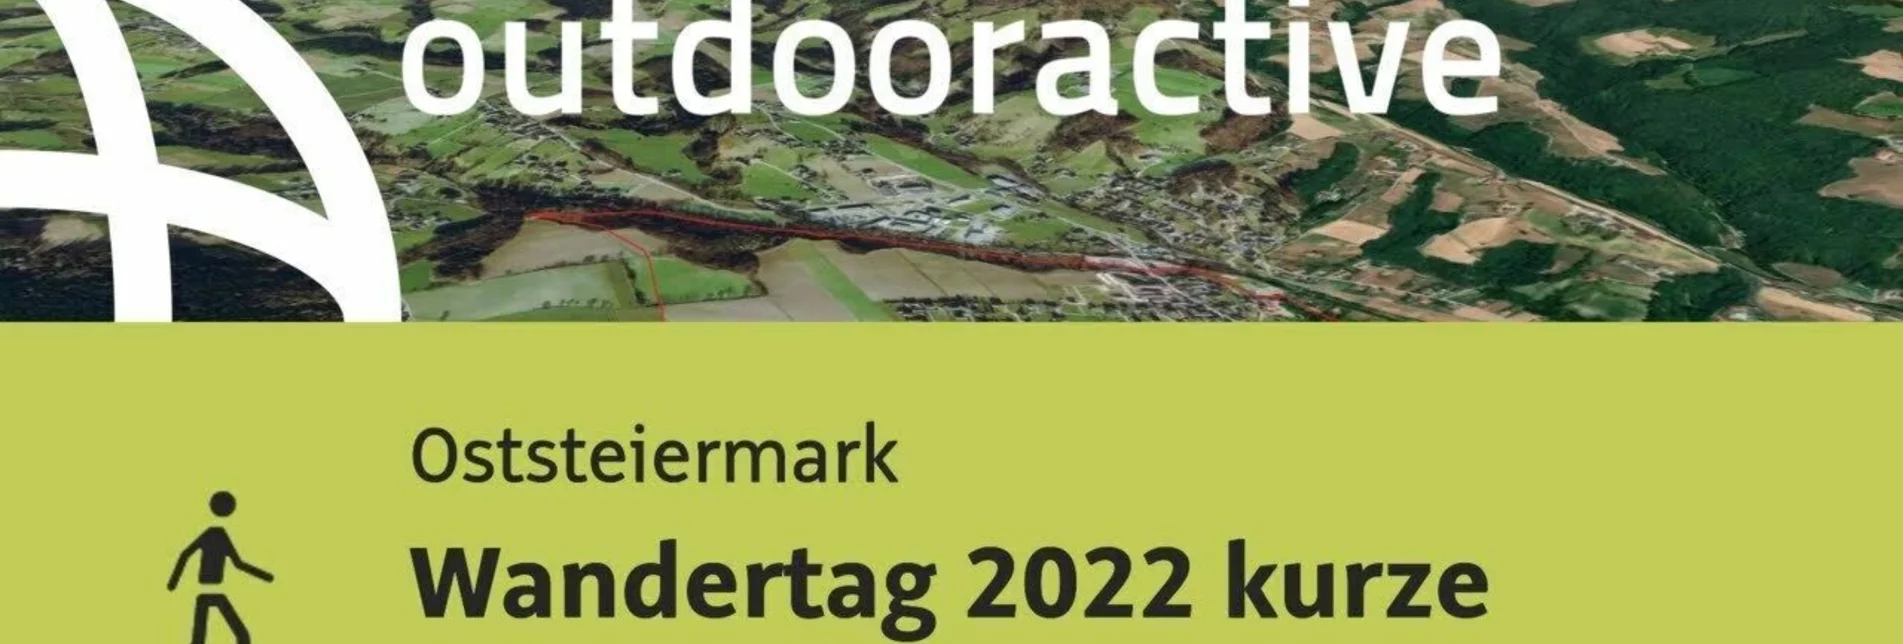 Hiking route Wandertag 2022 kurze Strecke - Touren-Impression #1 | © Outdooractive – 3D Videos